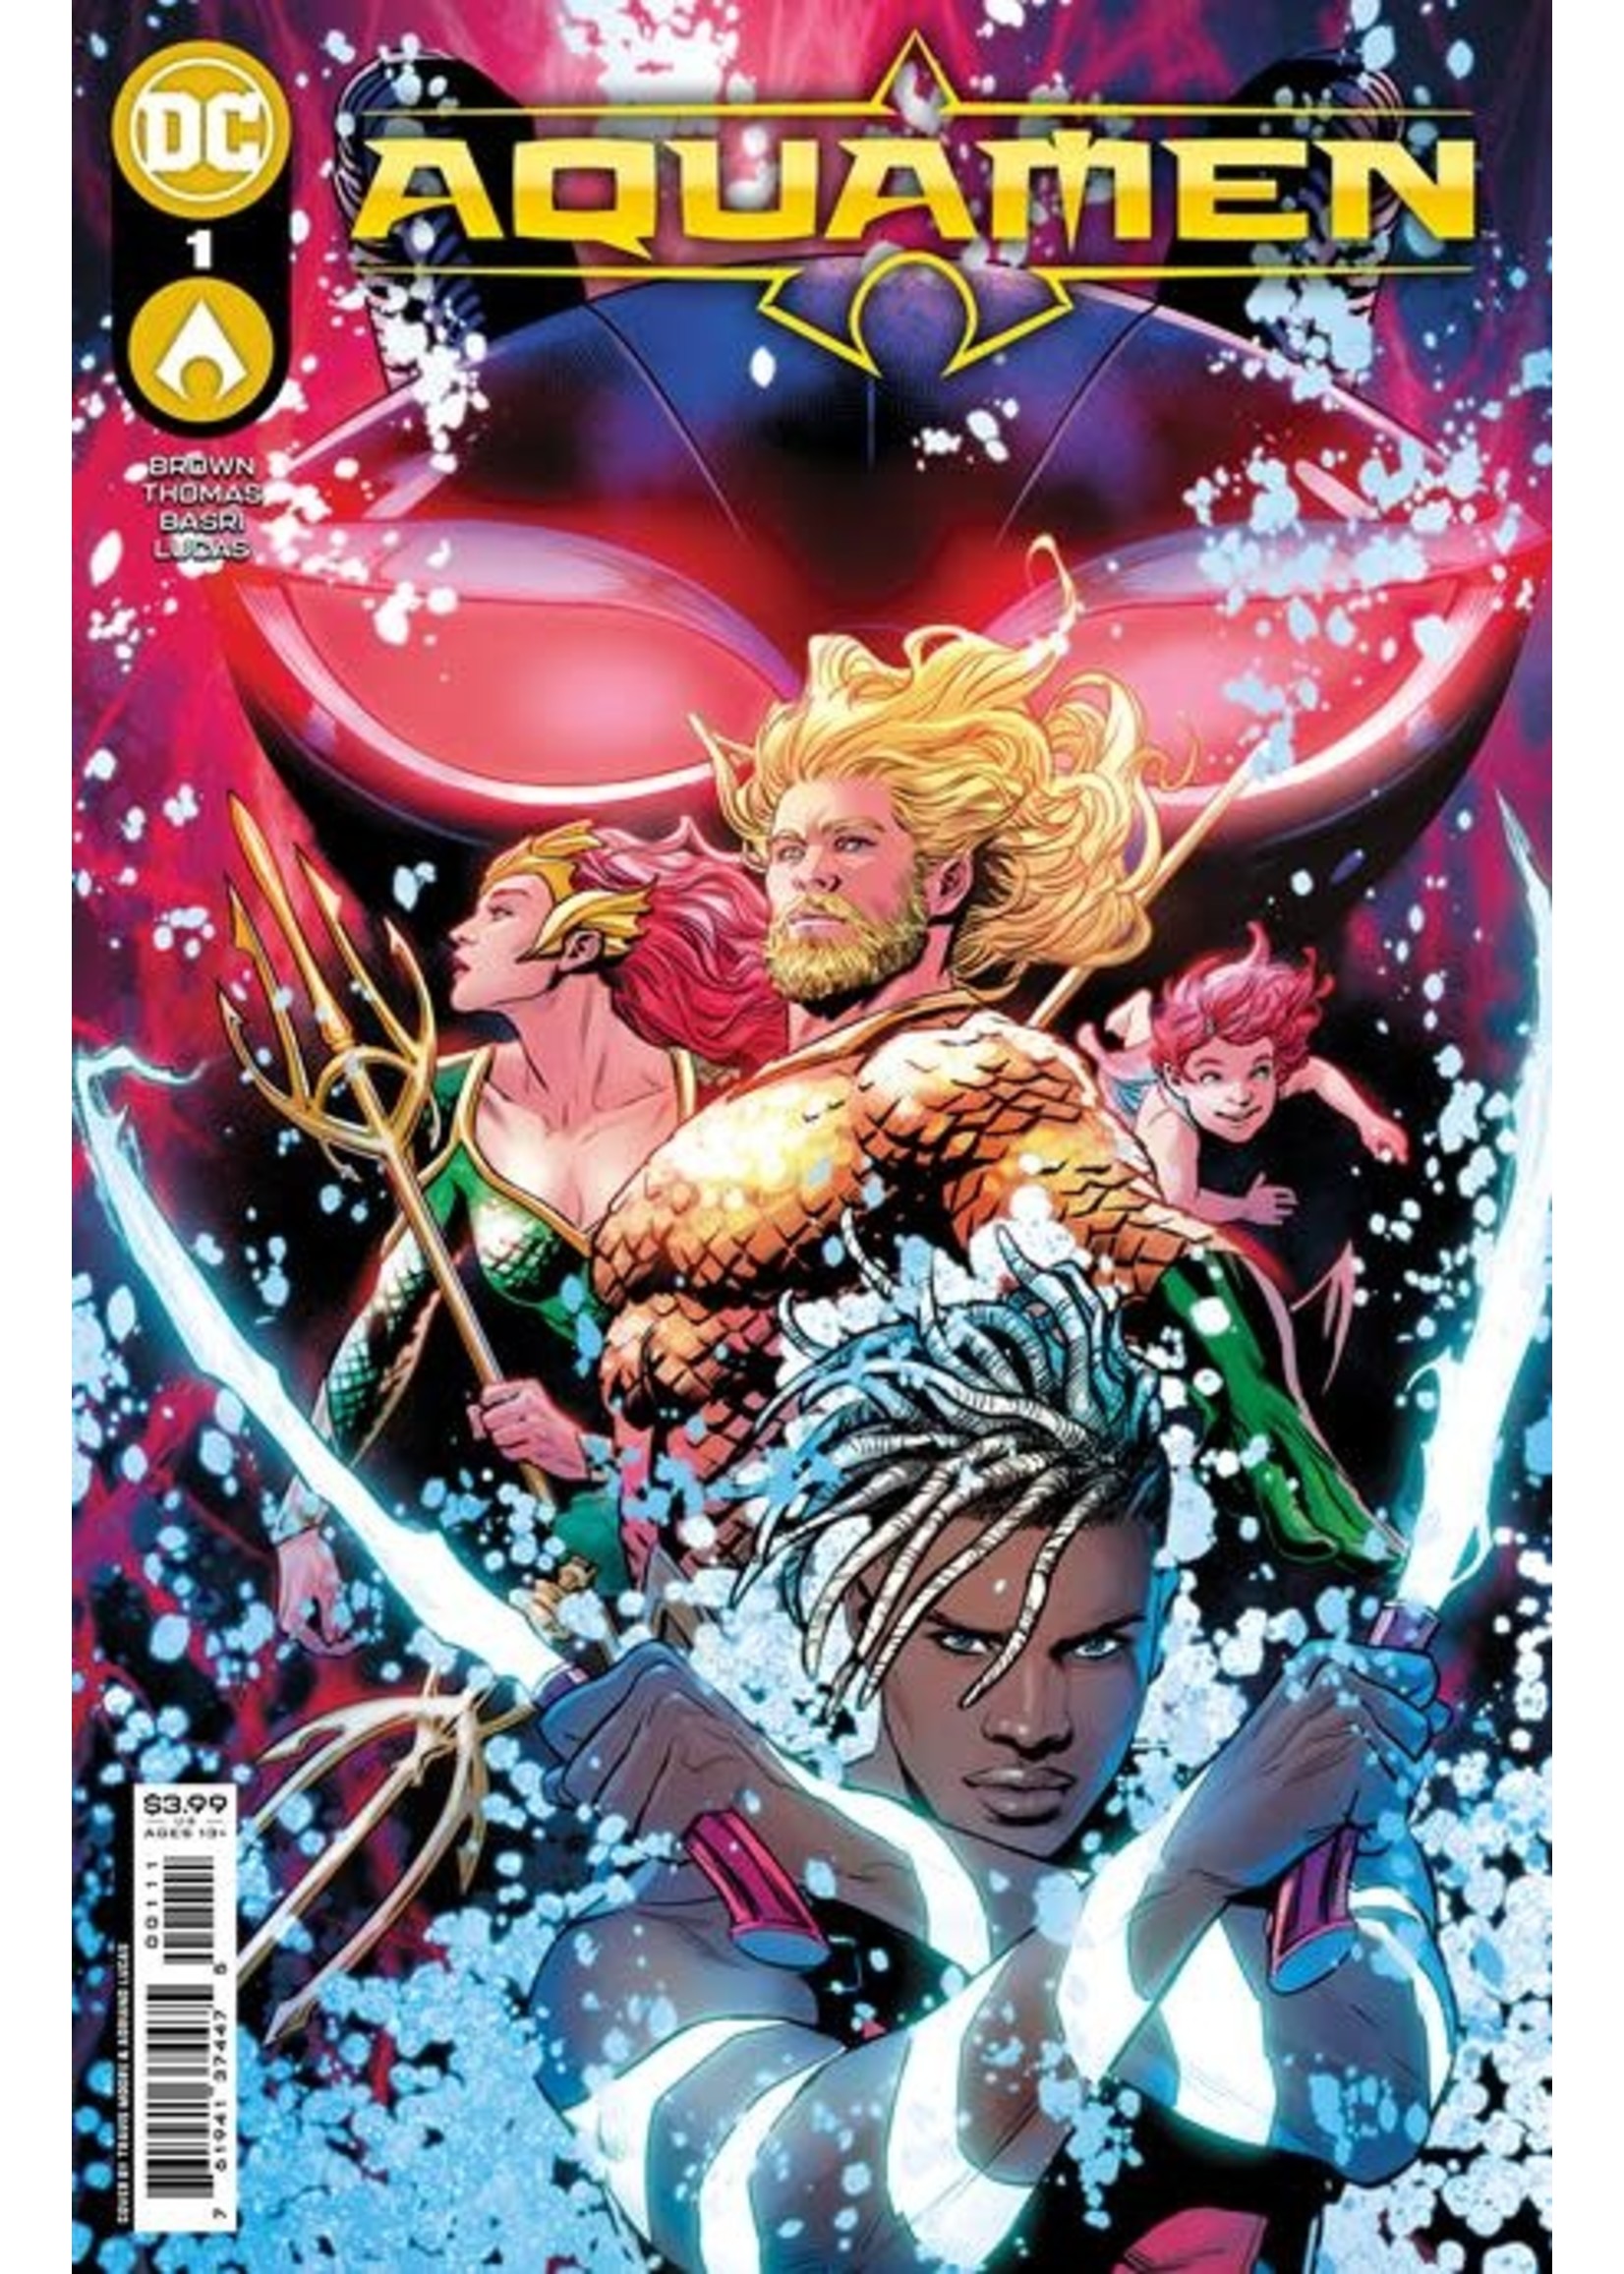 DC COMICS AQUAMEN complete 6 issue series